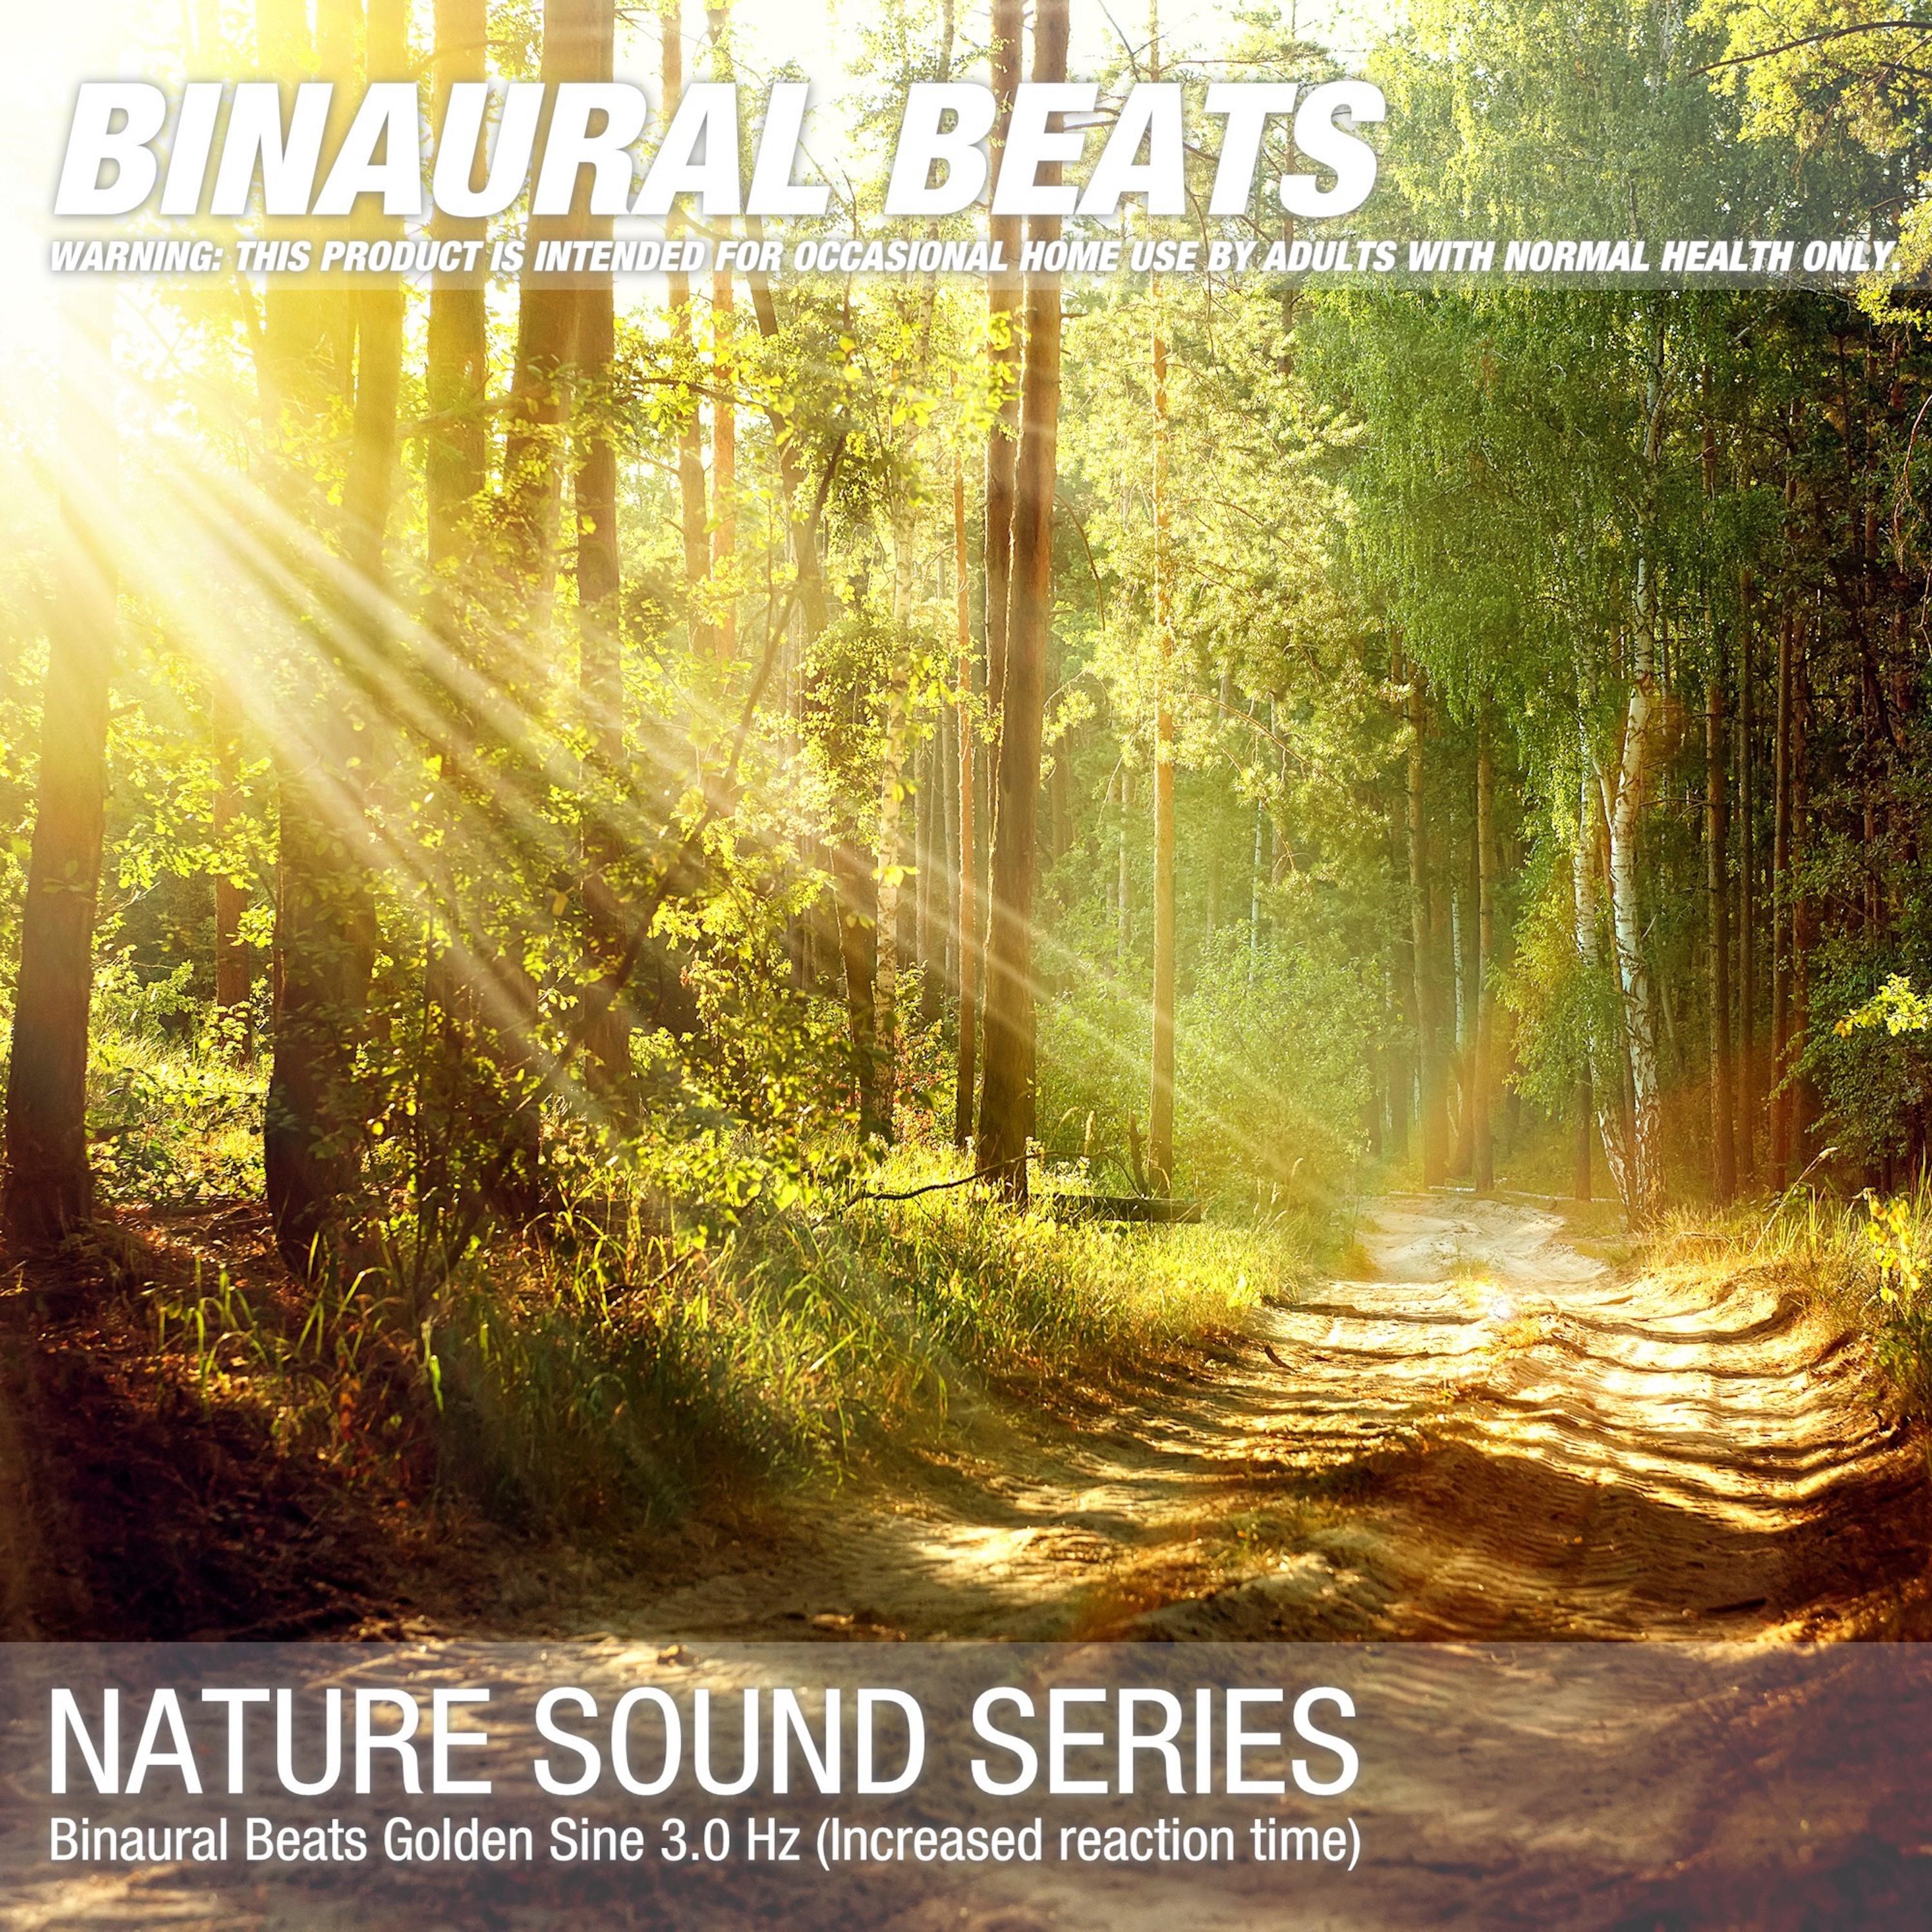 Binaural Beats Golden Sine 3.0 Hz (Increased reaction time) 02